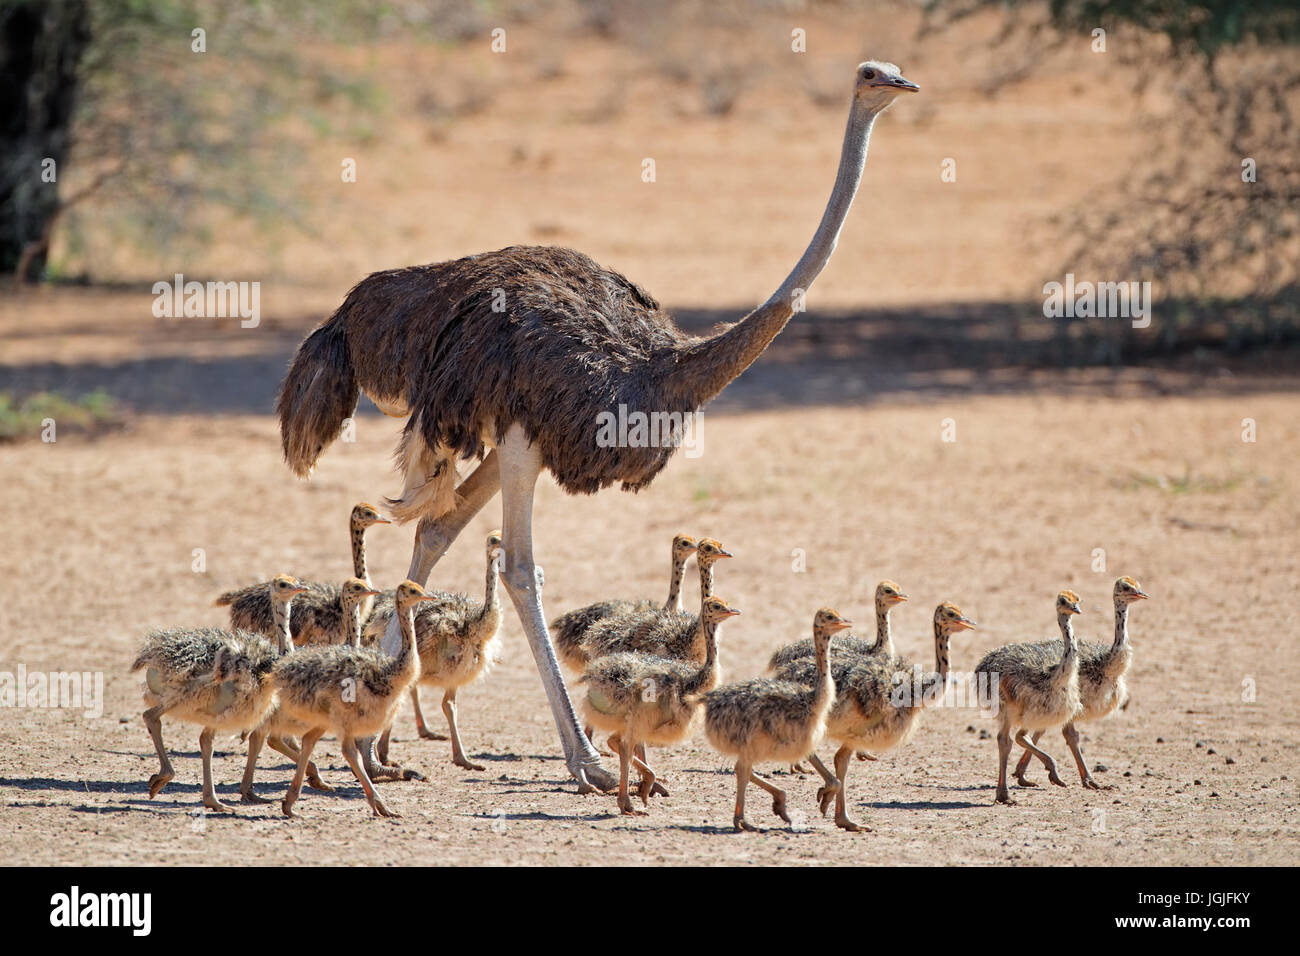 Female ostrich (Struthio camelus) with chicks, Kalahari desert, South Africa Stock Photo